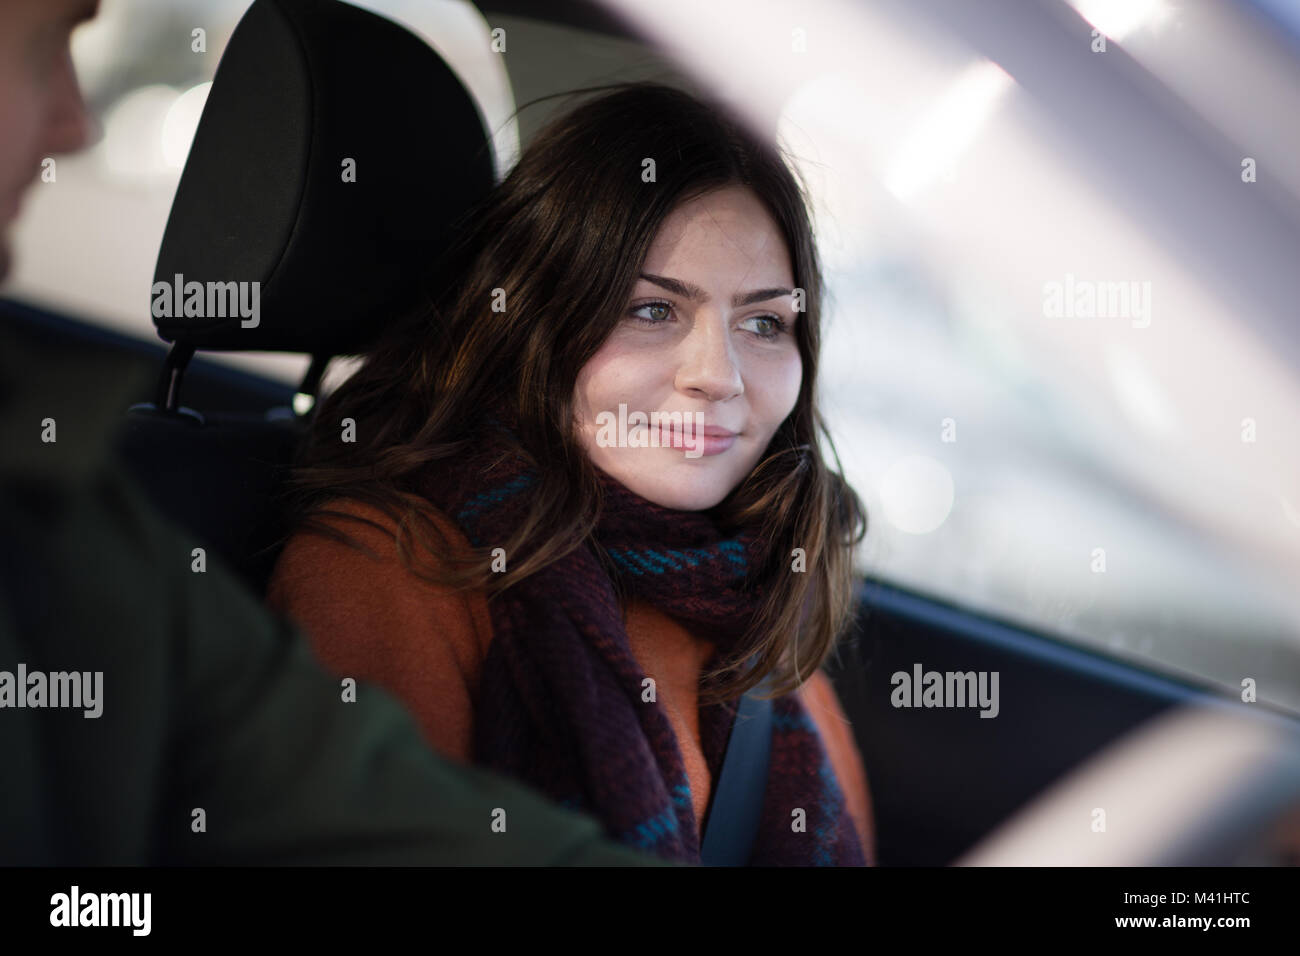 Passenger smiling at road ahead Stock Photo